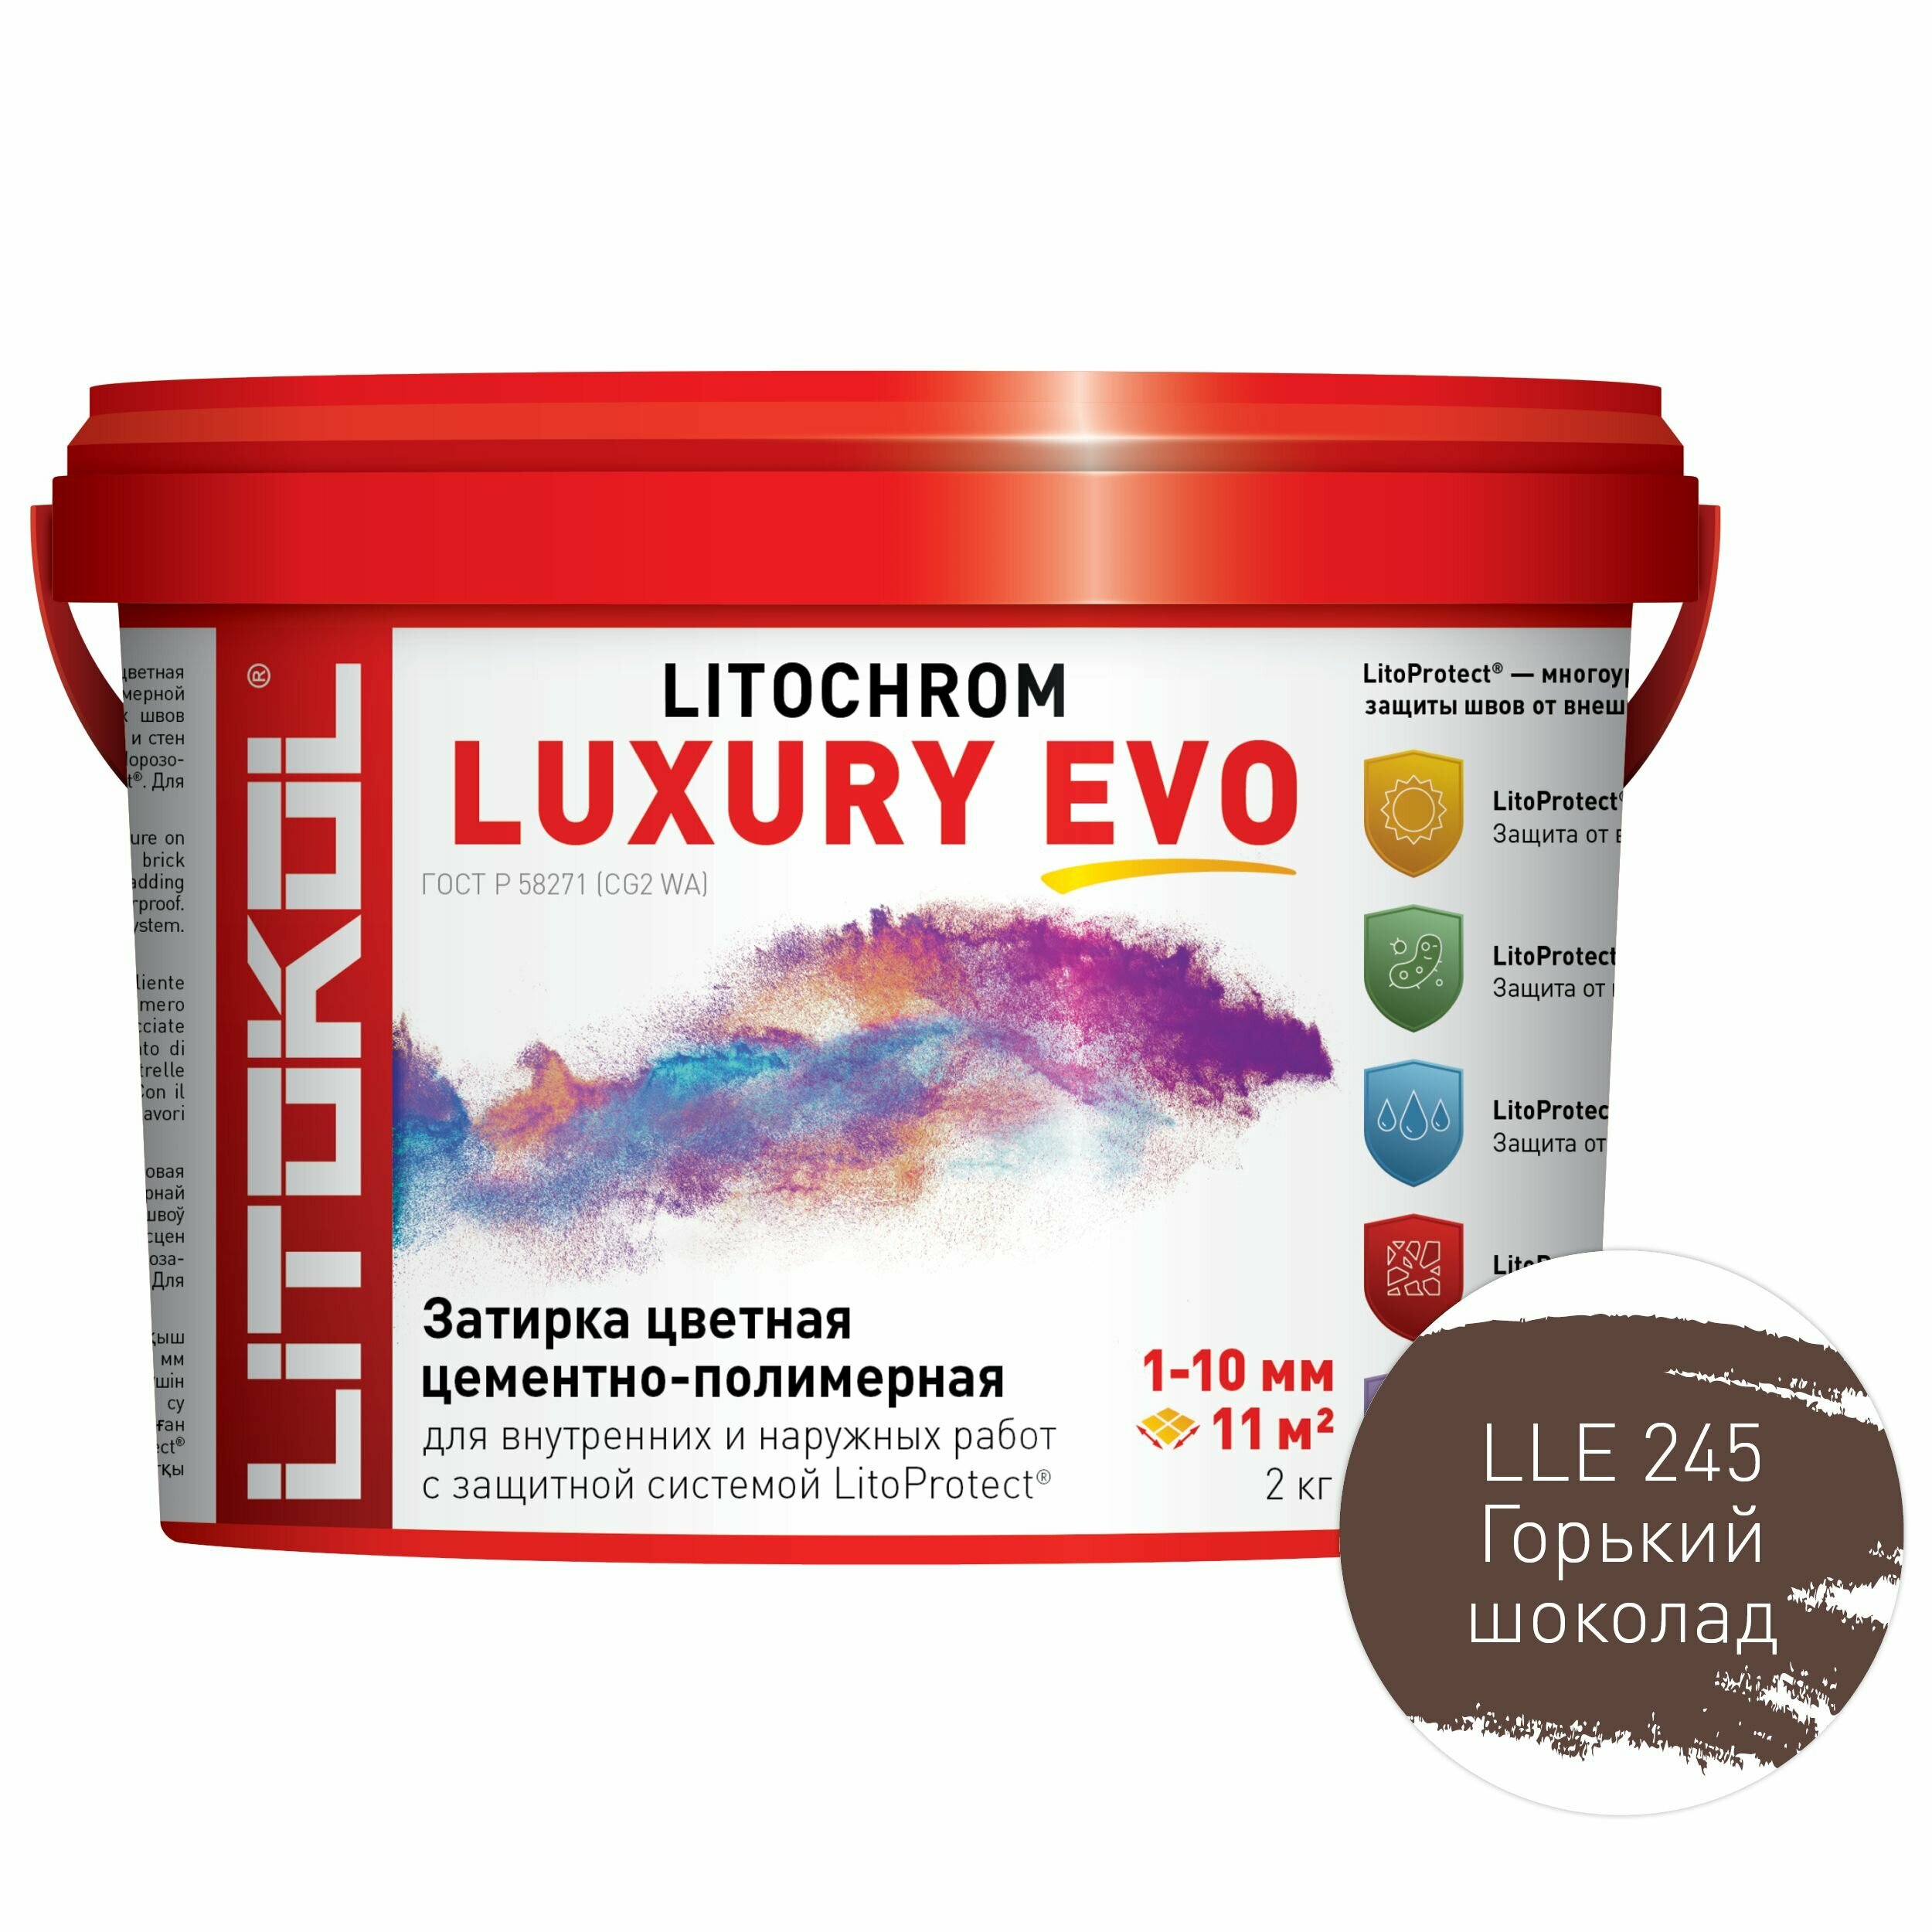 Затирка LITOKOL Litochrom Luxury EVO 245 Горький шоколад 2 кг